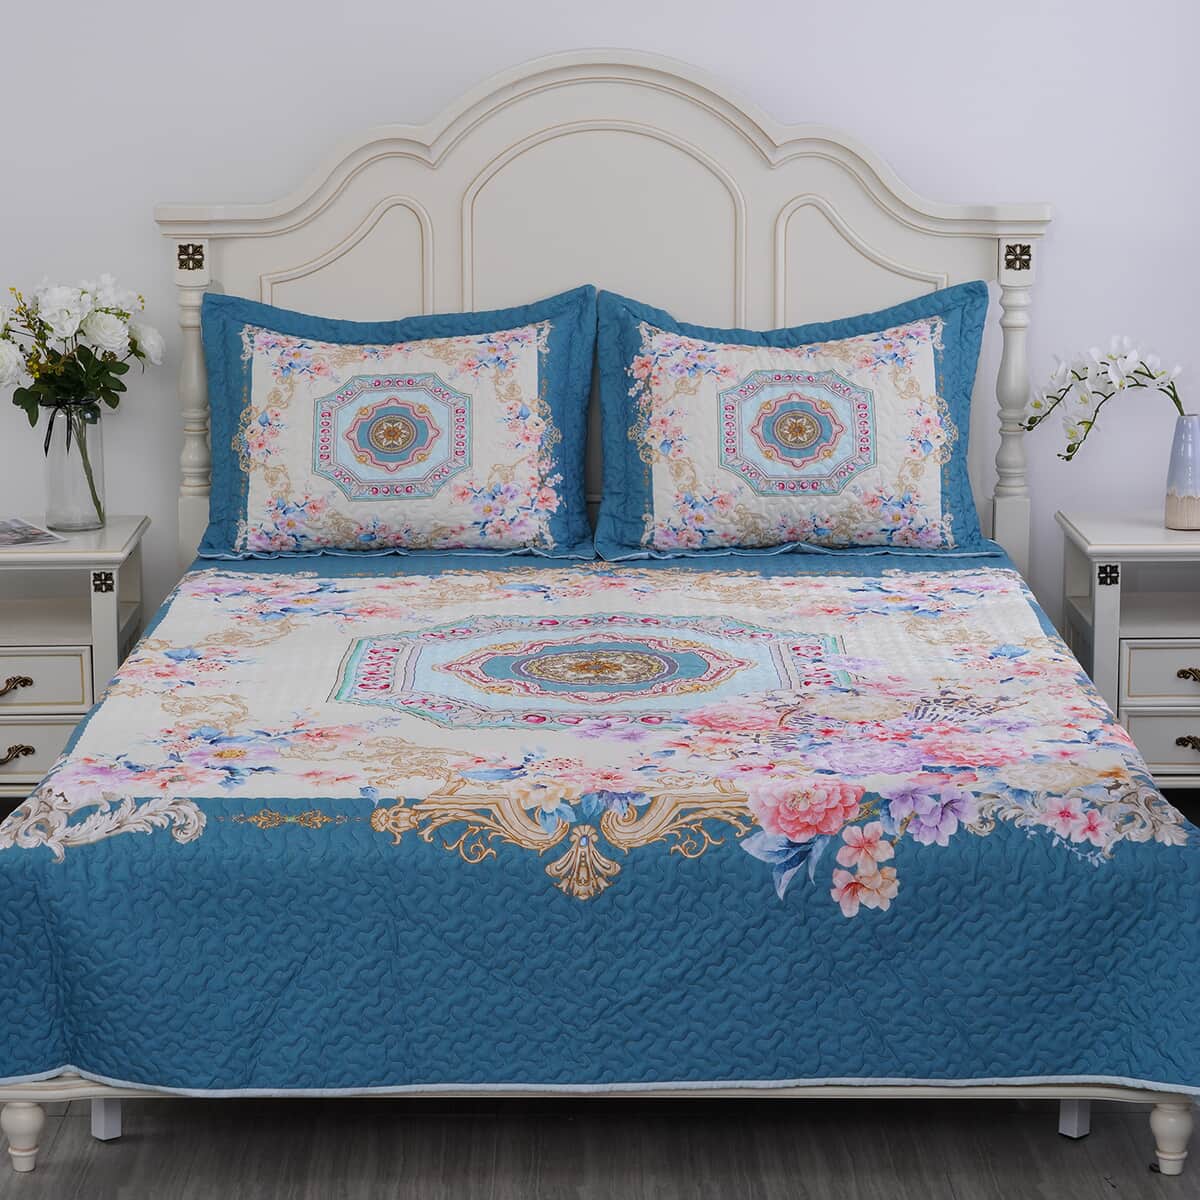 HOMESMART Teal Garden Digital Print 100% Microfiber Quilted Bedspread and 2 Pillow Shams - Queen image number 0